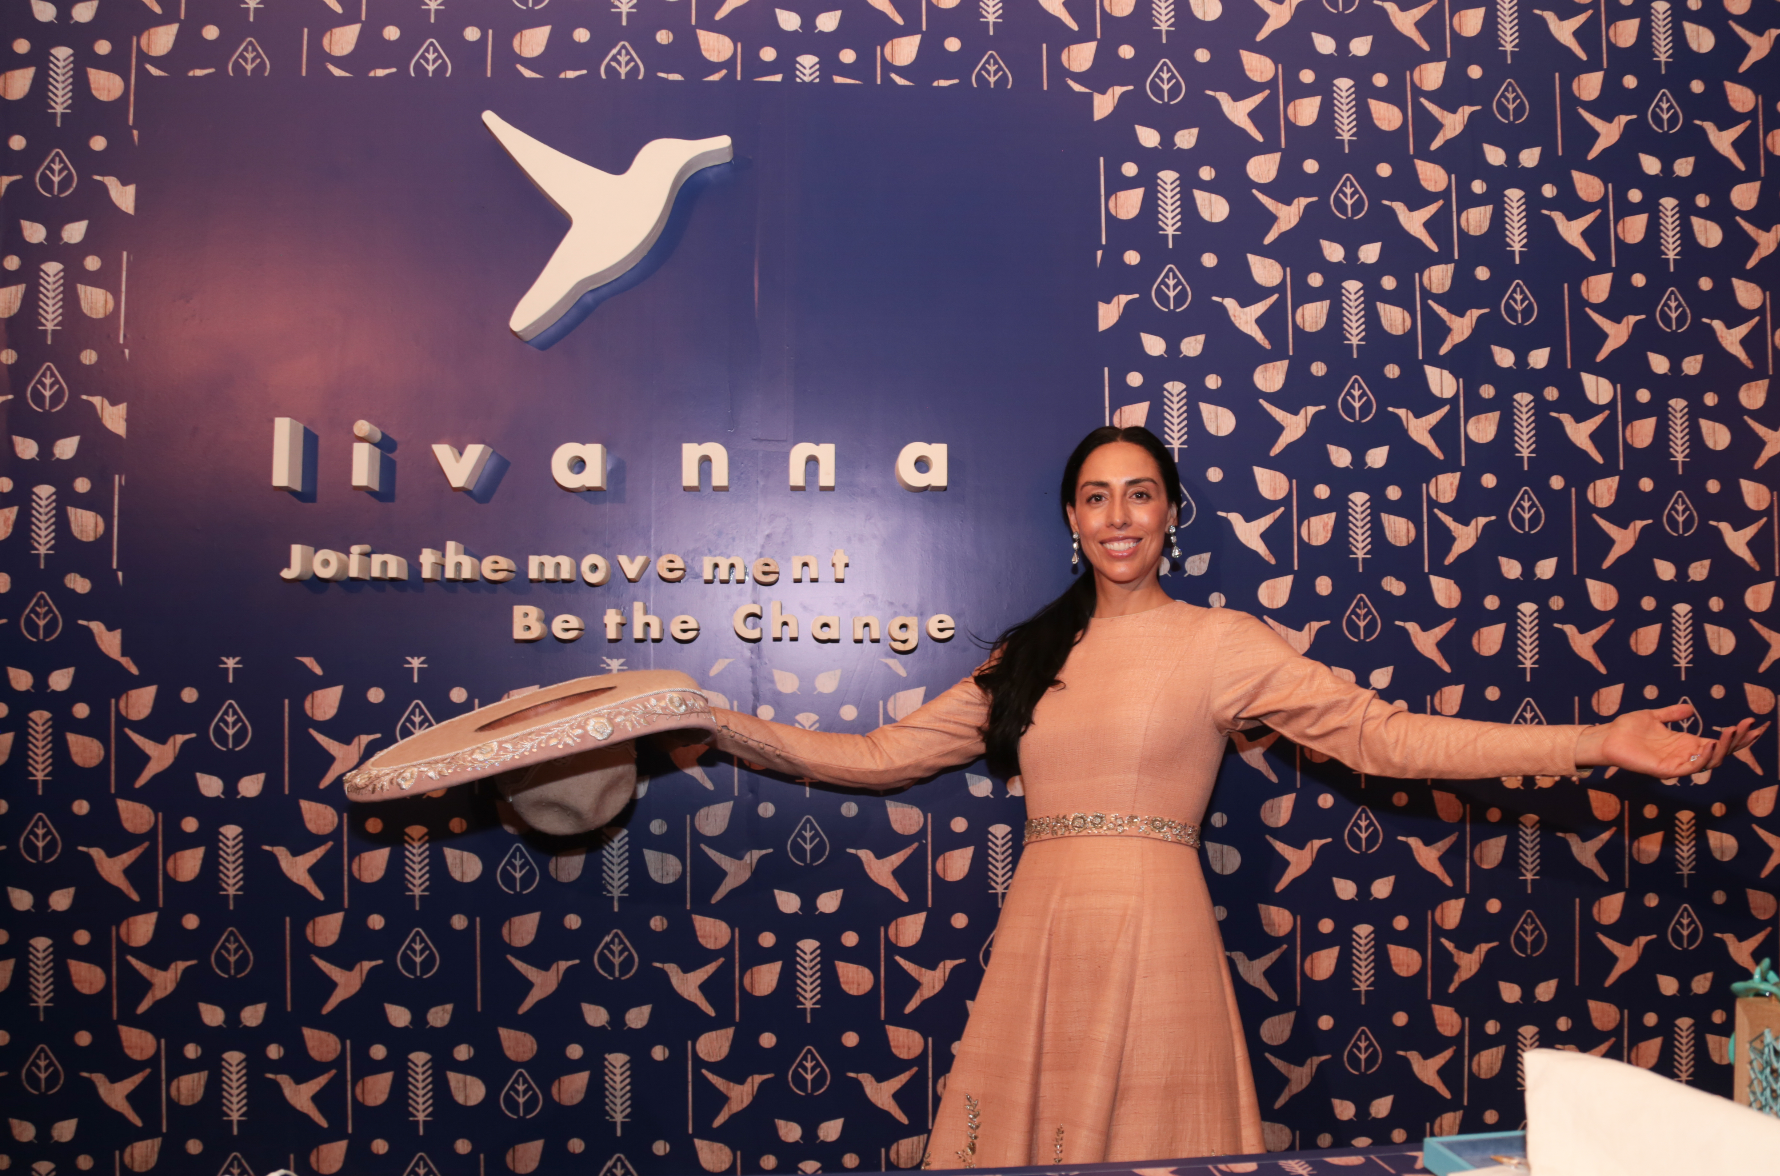 Livanna, marca de ropa infantil con materiales 100% naturales, celebra su décimo aniversario